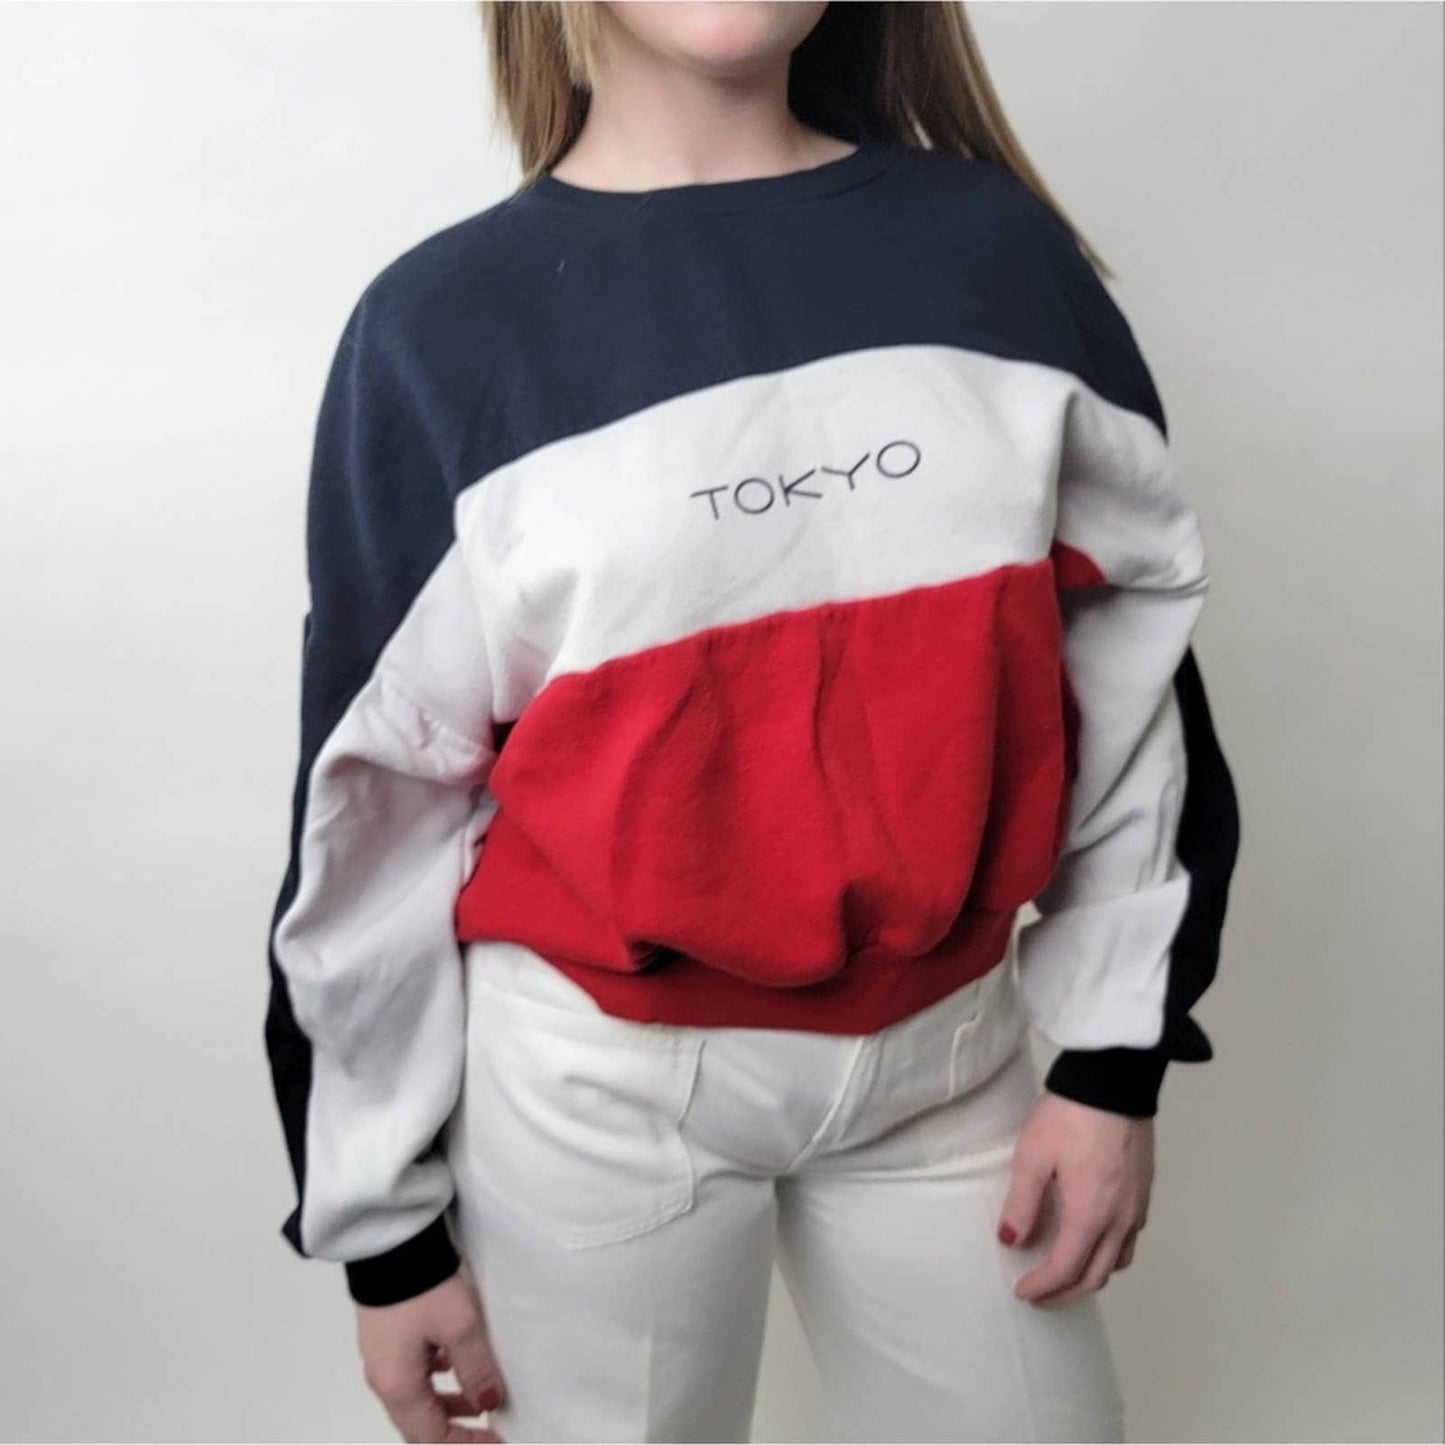 Red White & Blue Striped Colorblock 'Tokyo' Crewneck Sweatshirt - M